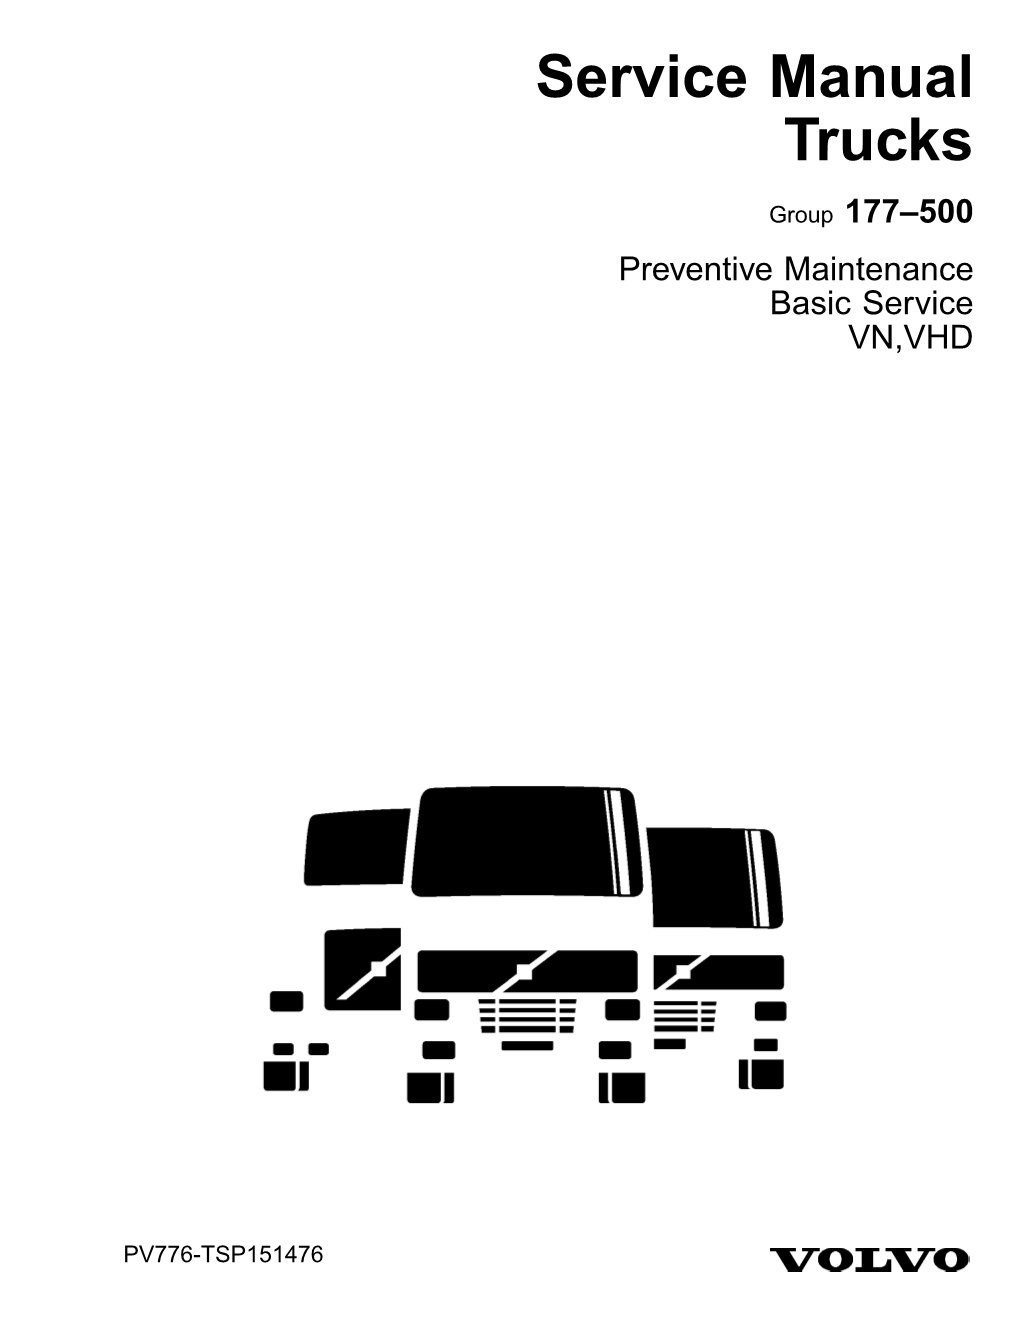 Service Manual Trucks